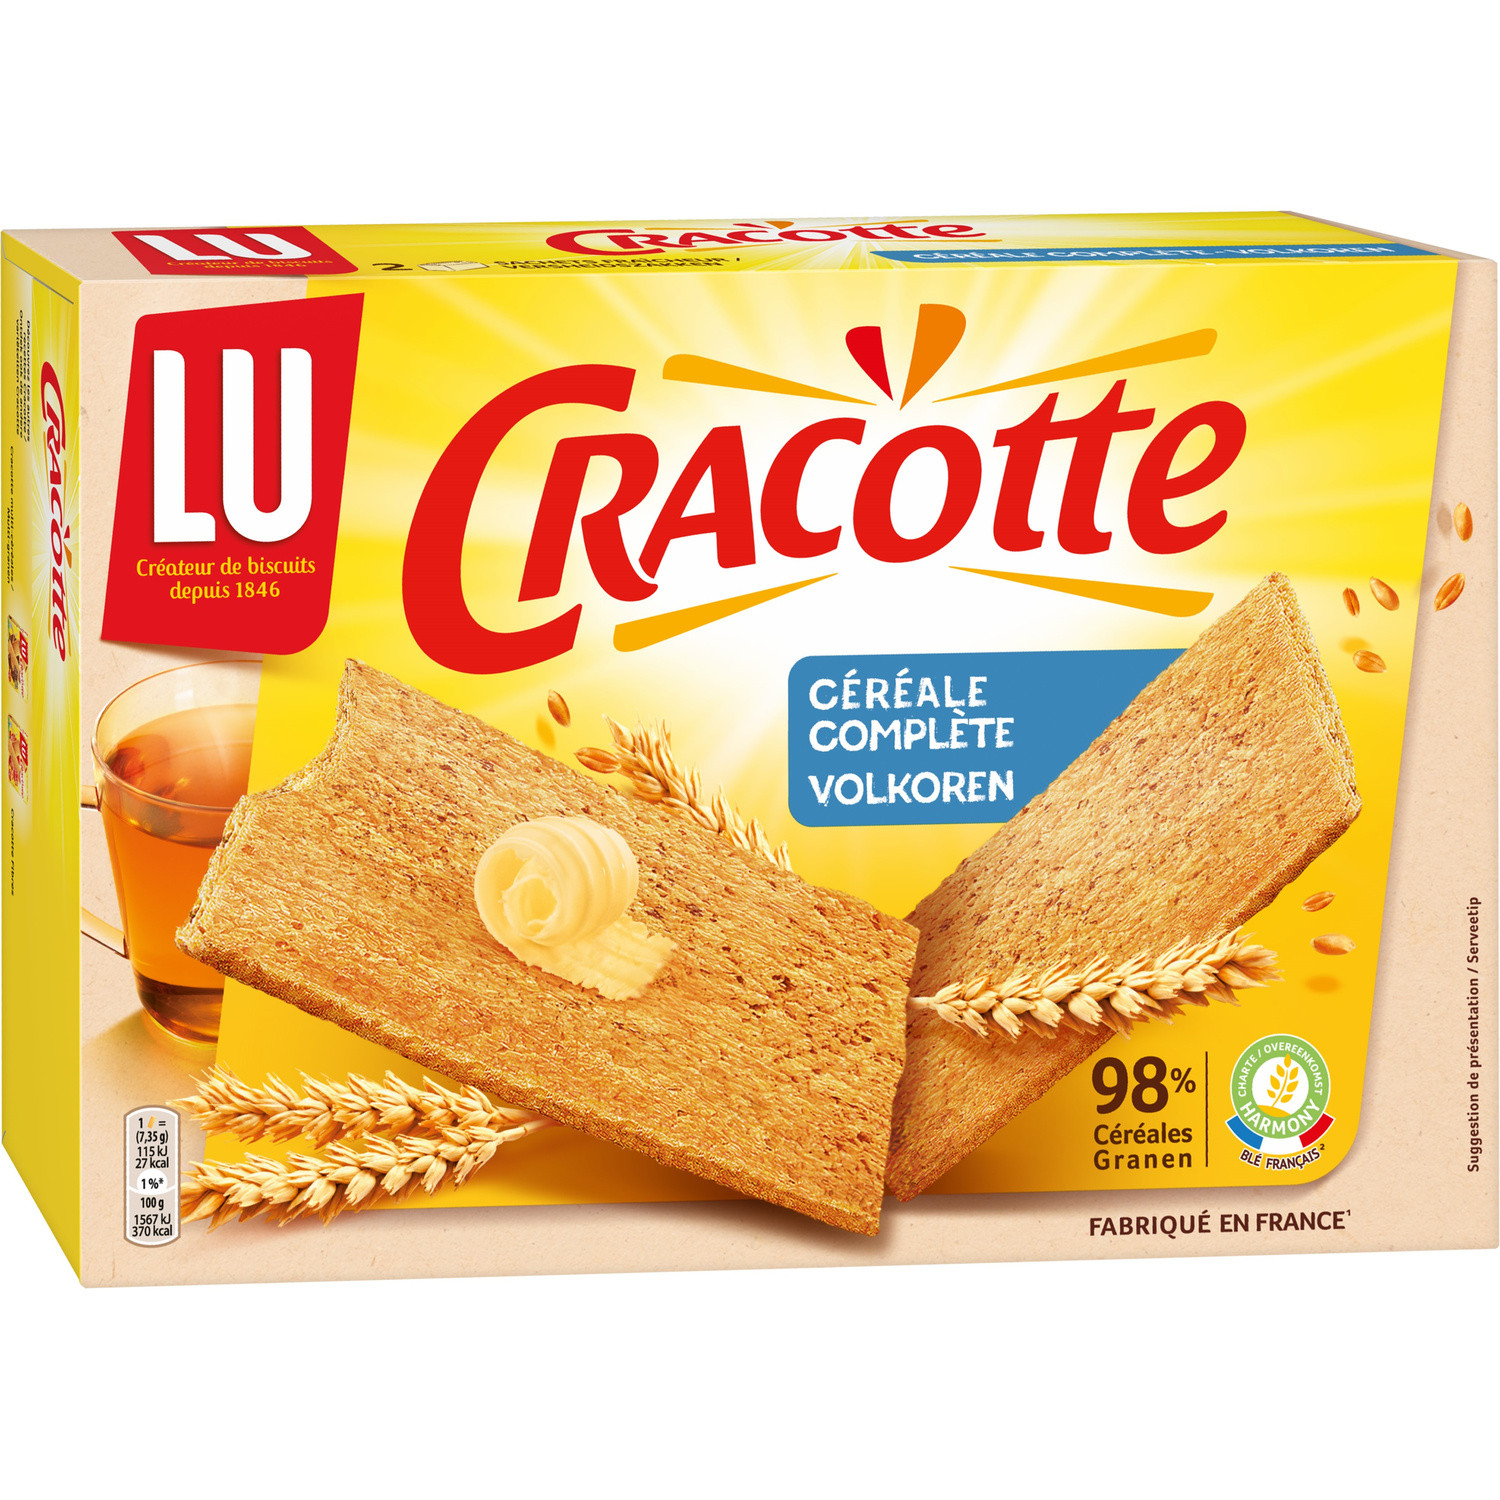 LU - Cracotte - Craquinette Framboise